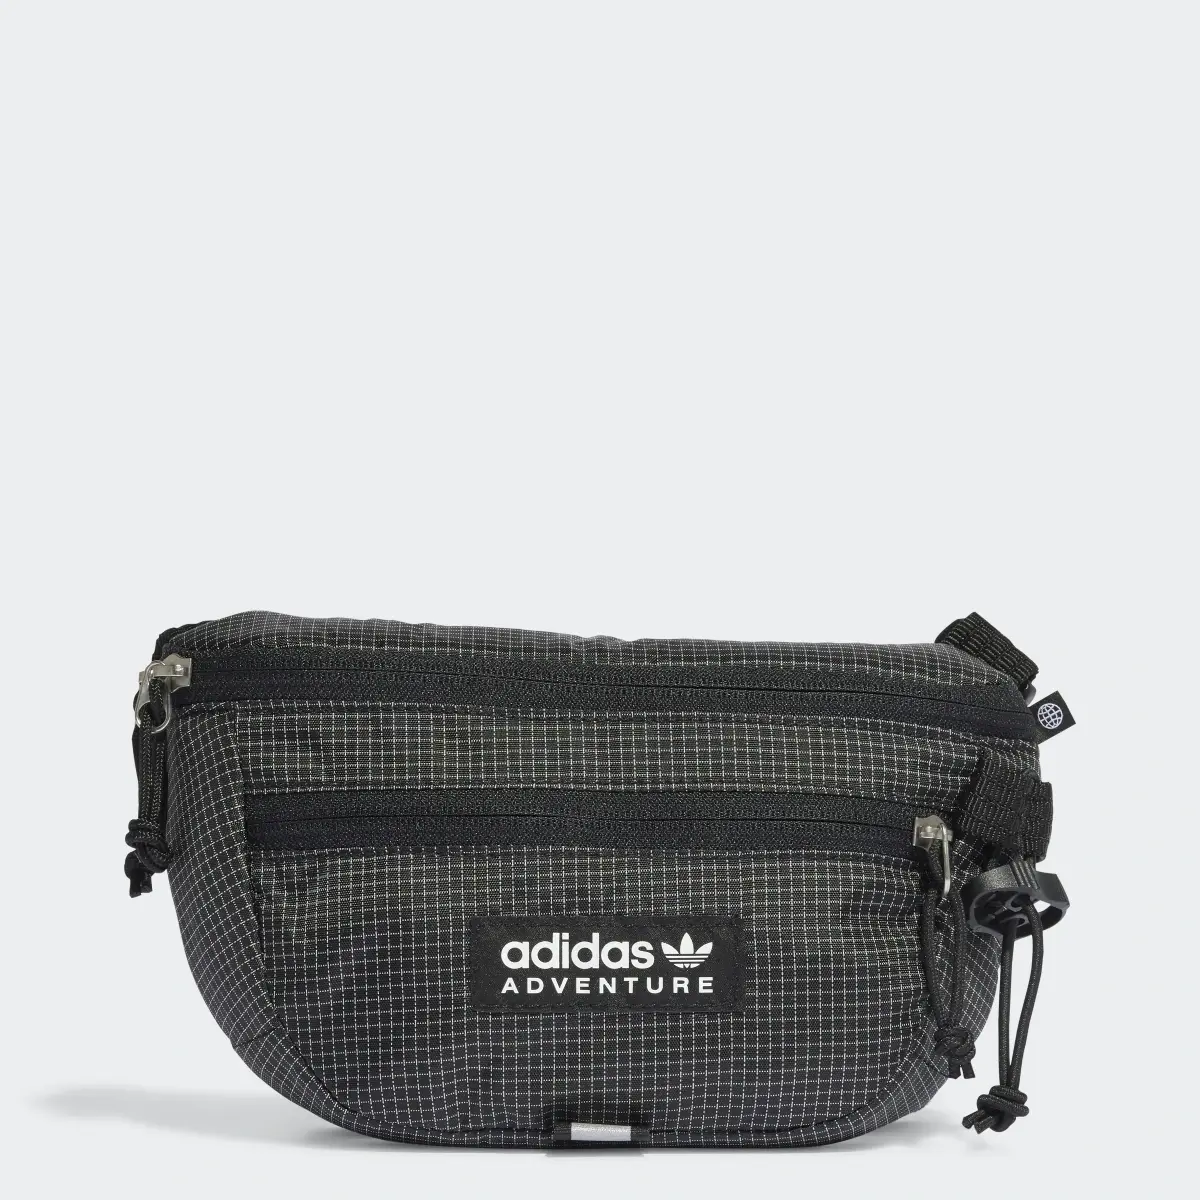 Adidas Adventure Waist Bag Small. 1